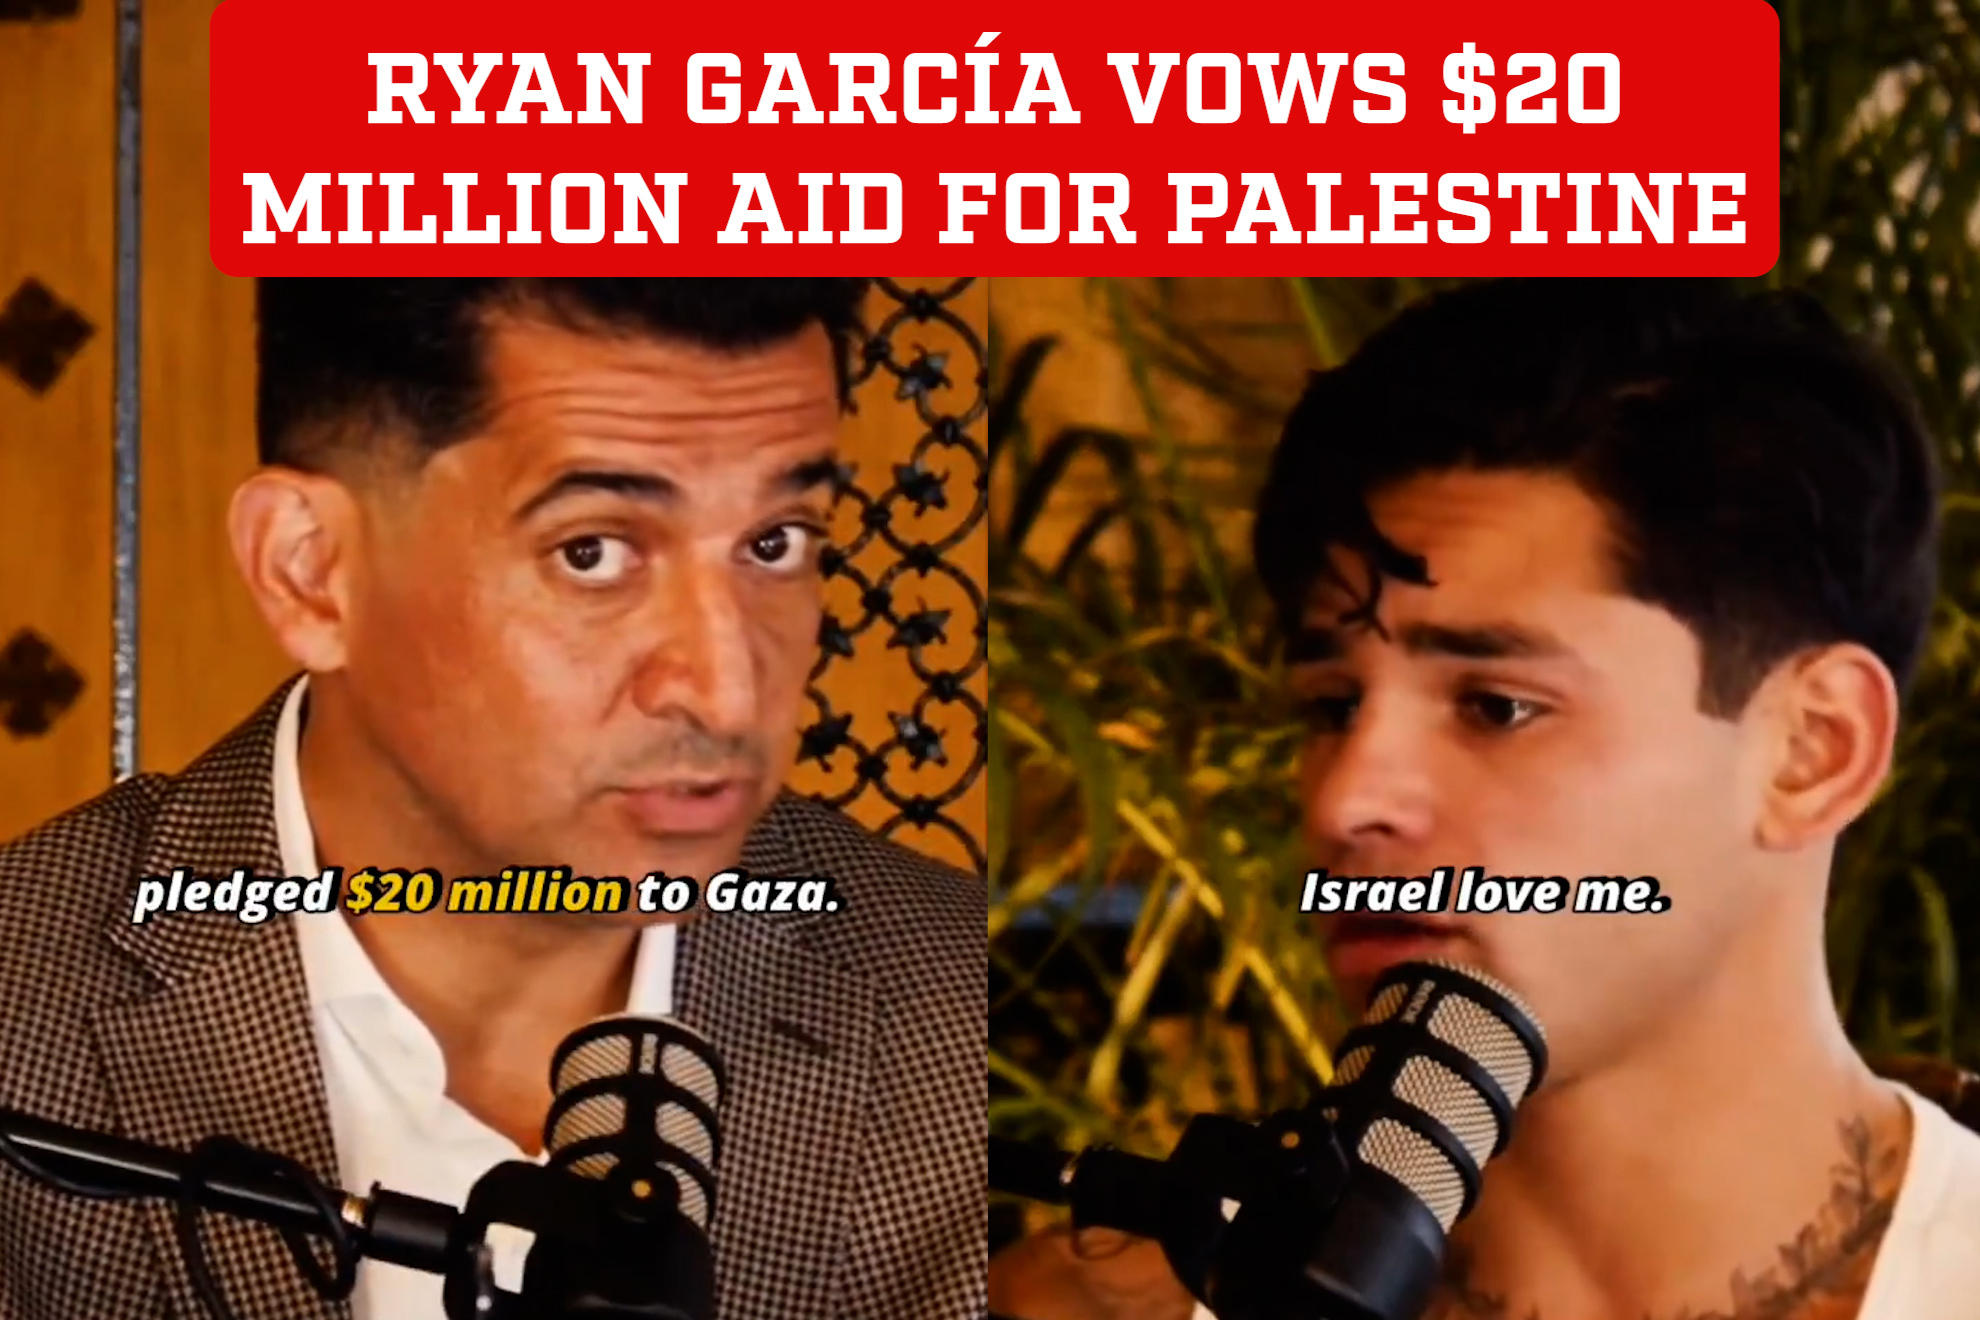 Ryan Garca promises $20 million in aid for Palestine